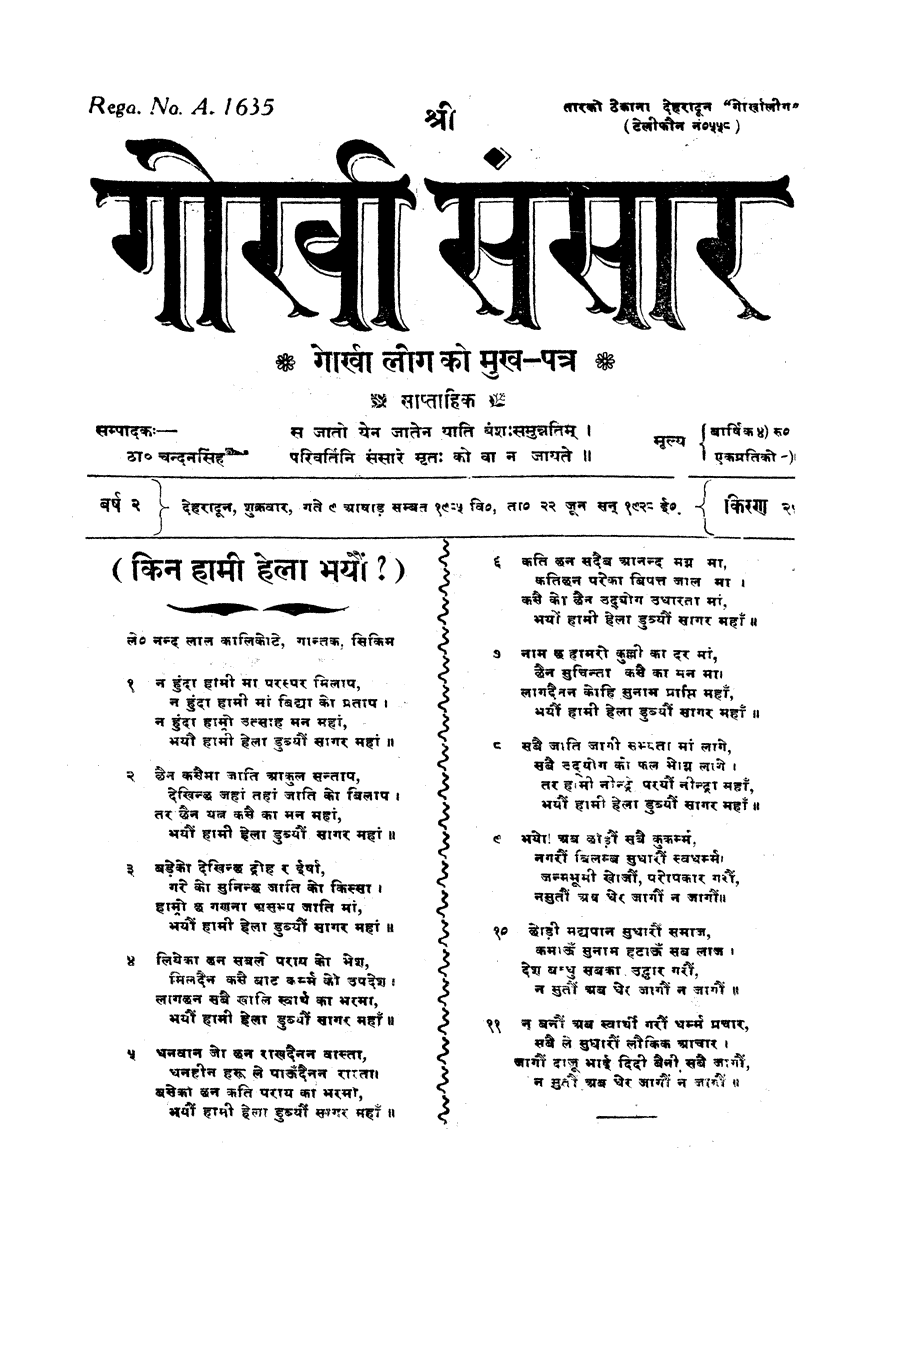 Gorkha Sansar, 22 June 1928, page 1